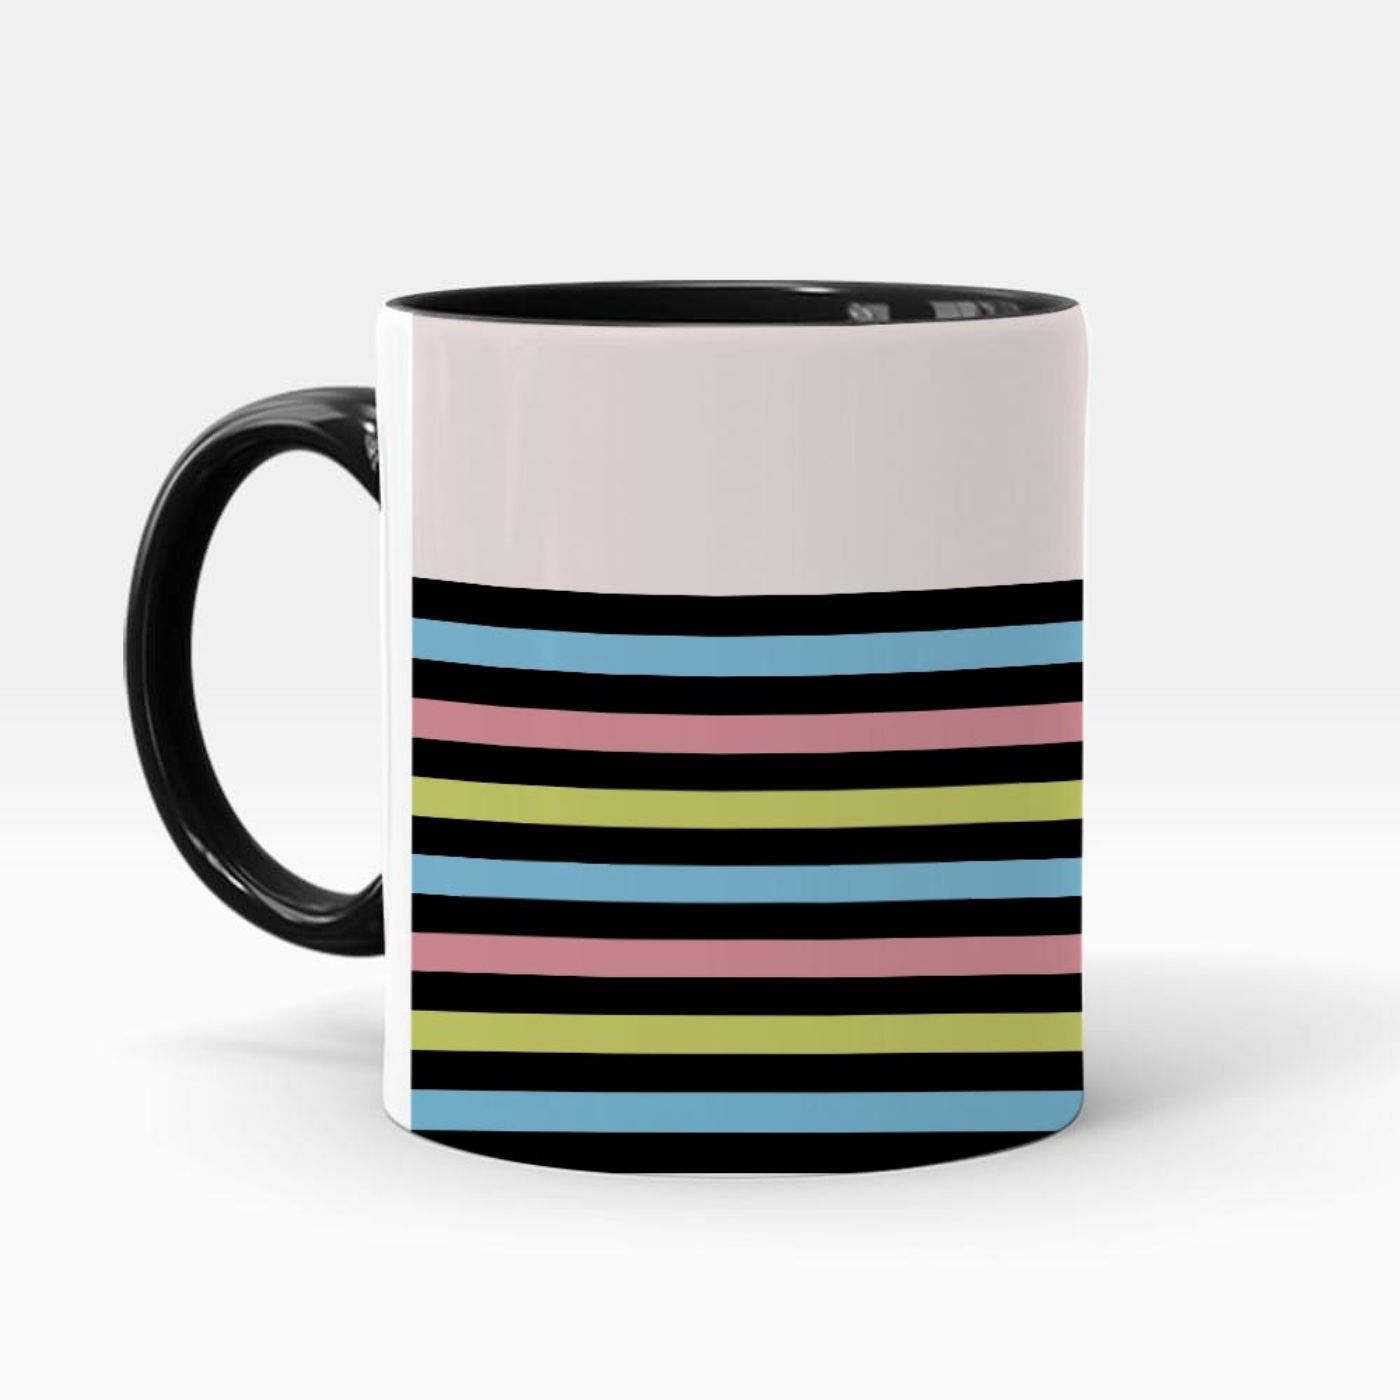 Orka Digital Pritned Theme 40 Coffee Mug   